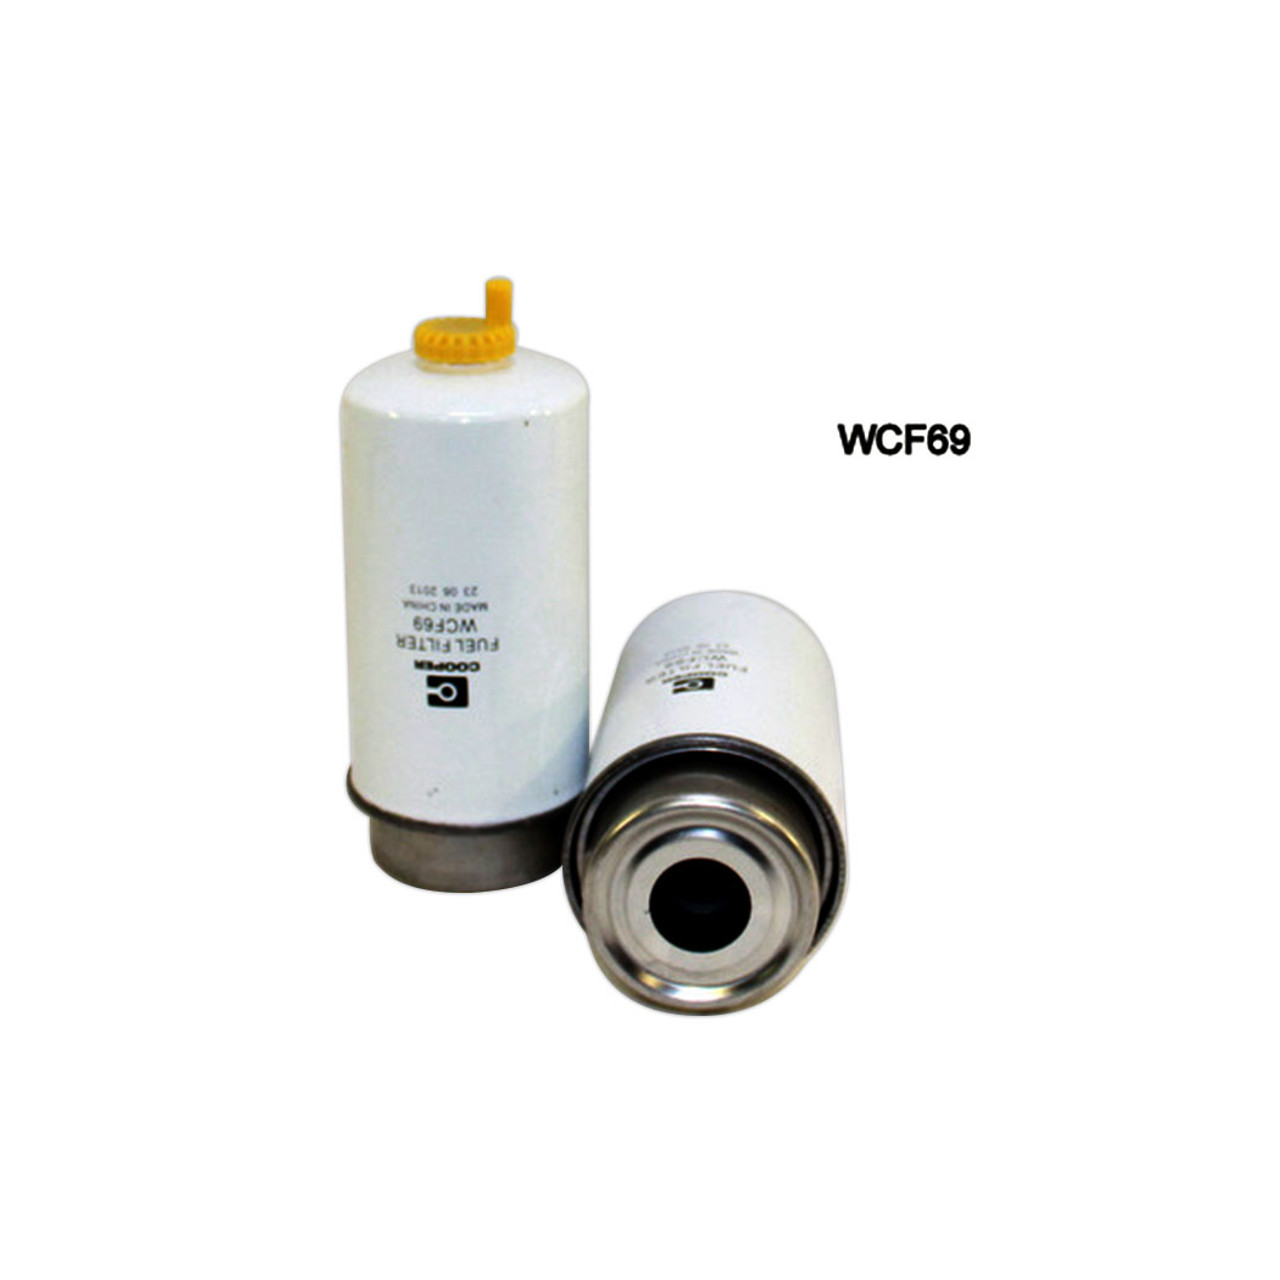 WCF69 Wesfil Cooper Diesel Fuel Filter for Ford (Cross Ref: Z592 